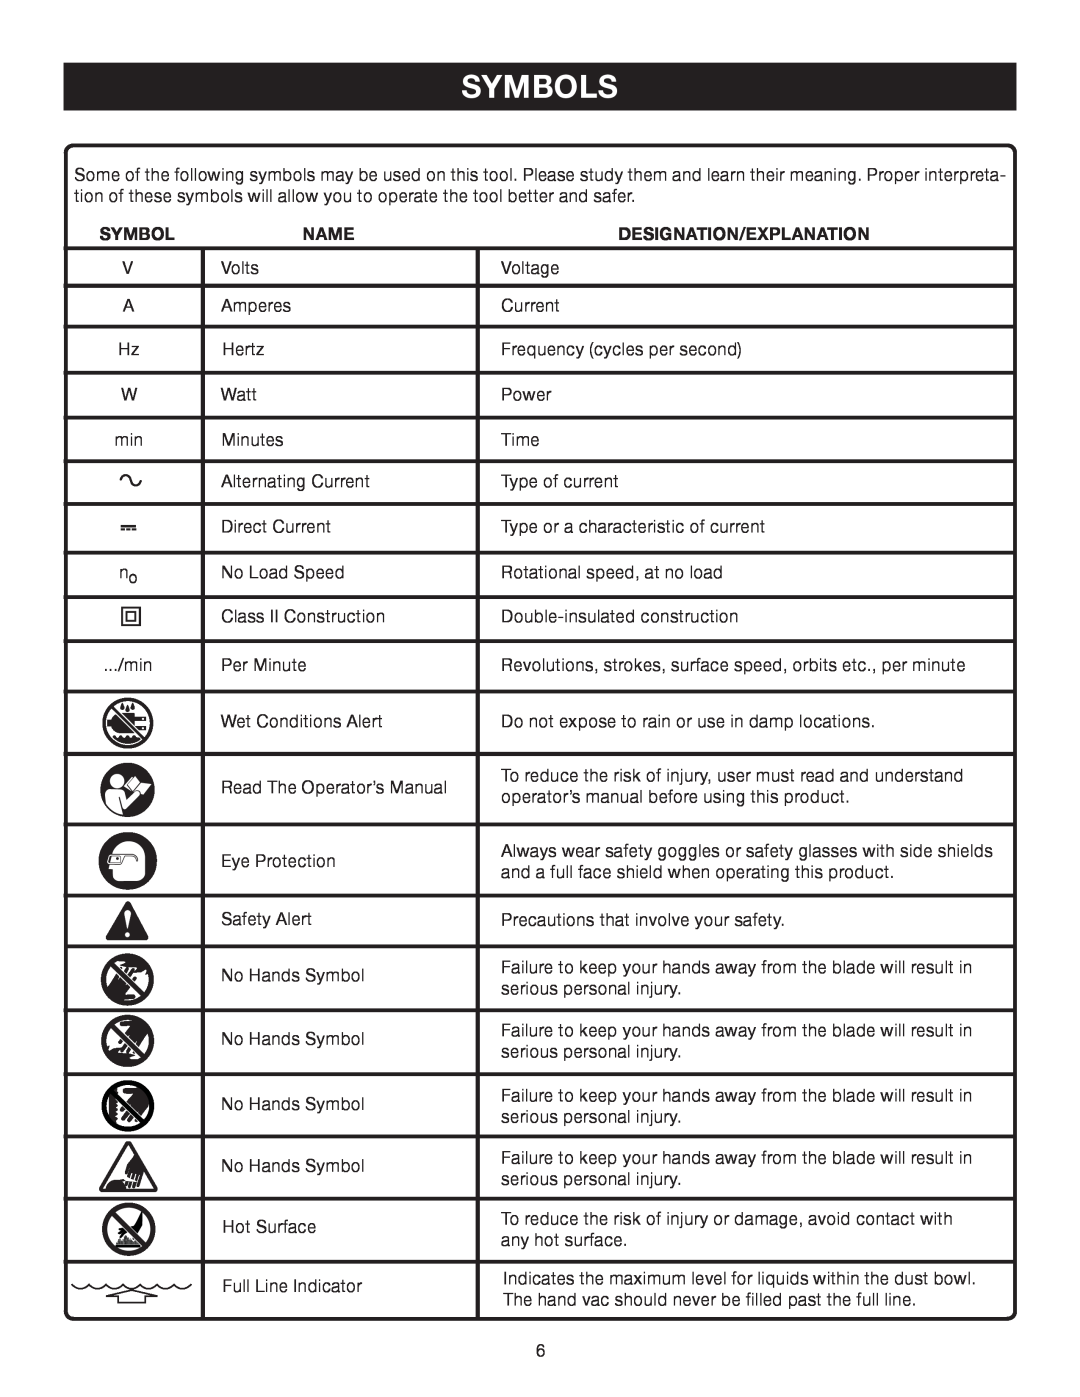 Ryobi P710 manual Symbols, Name, Designation/Explanation 